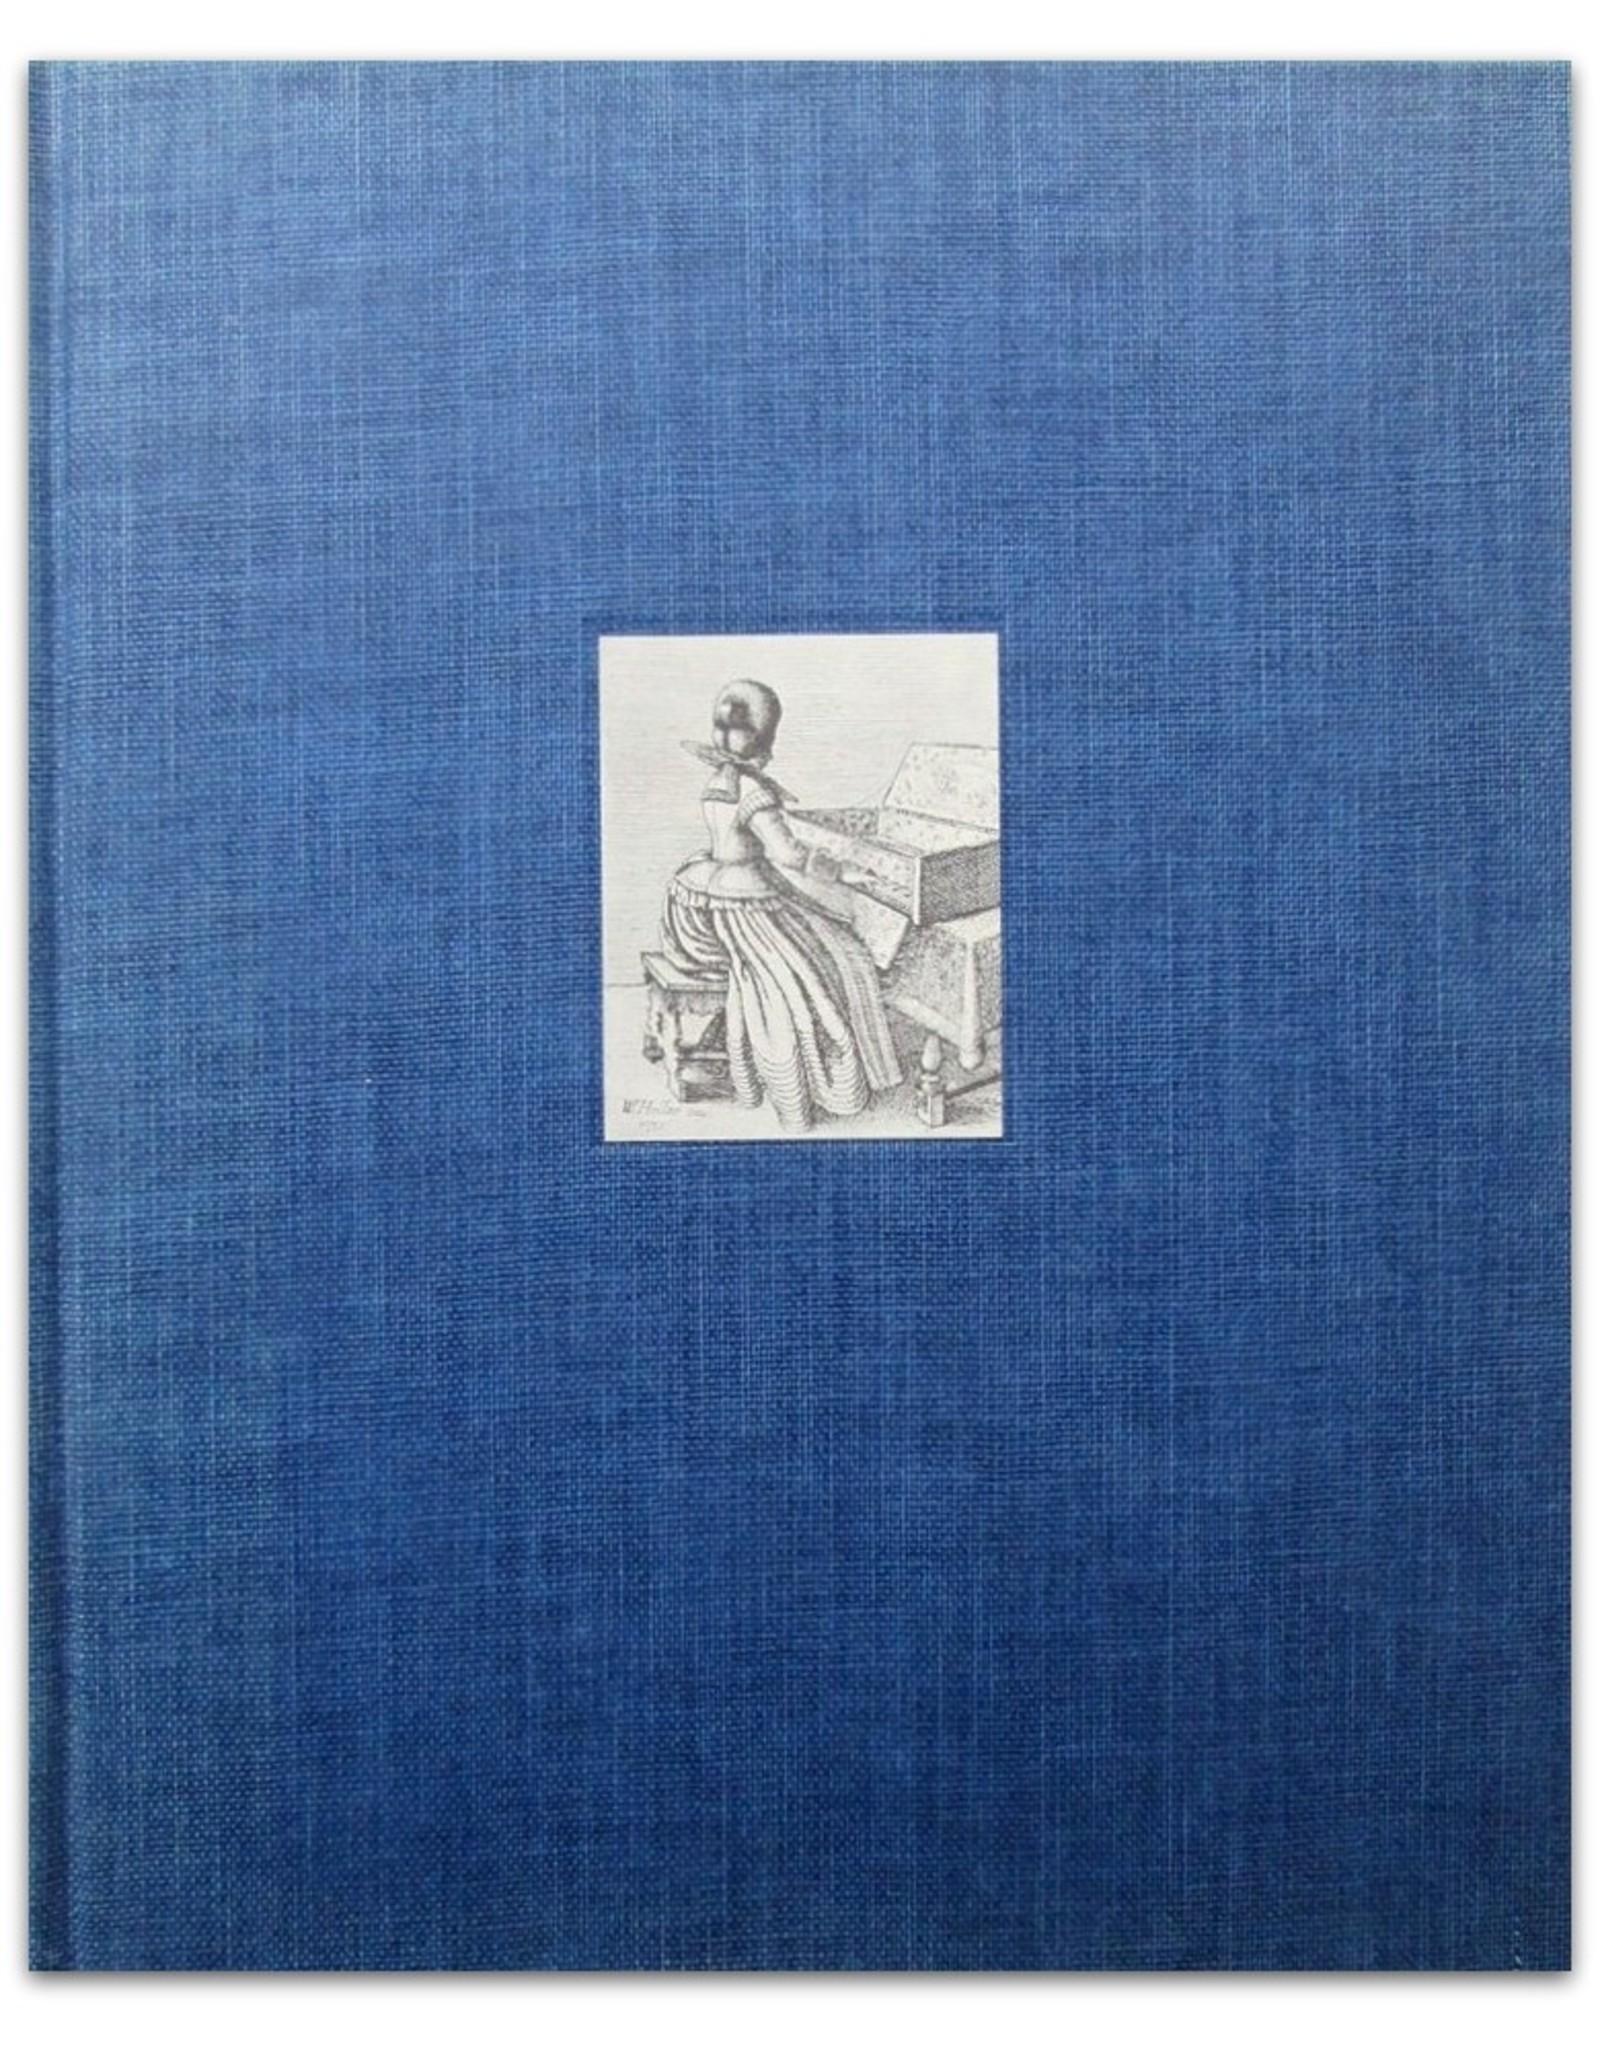 Sidney Beck & Elizabeth E. Roth - Music in Prints